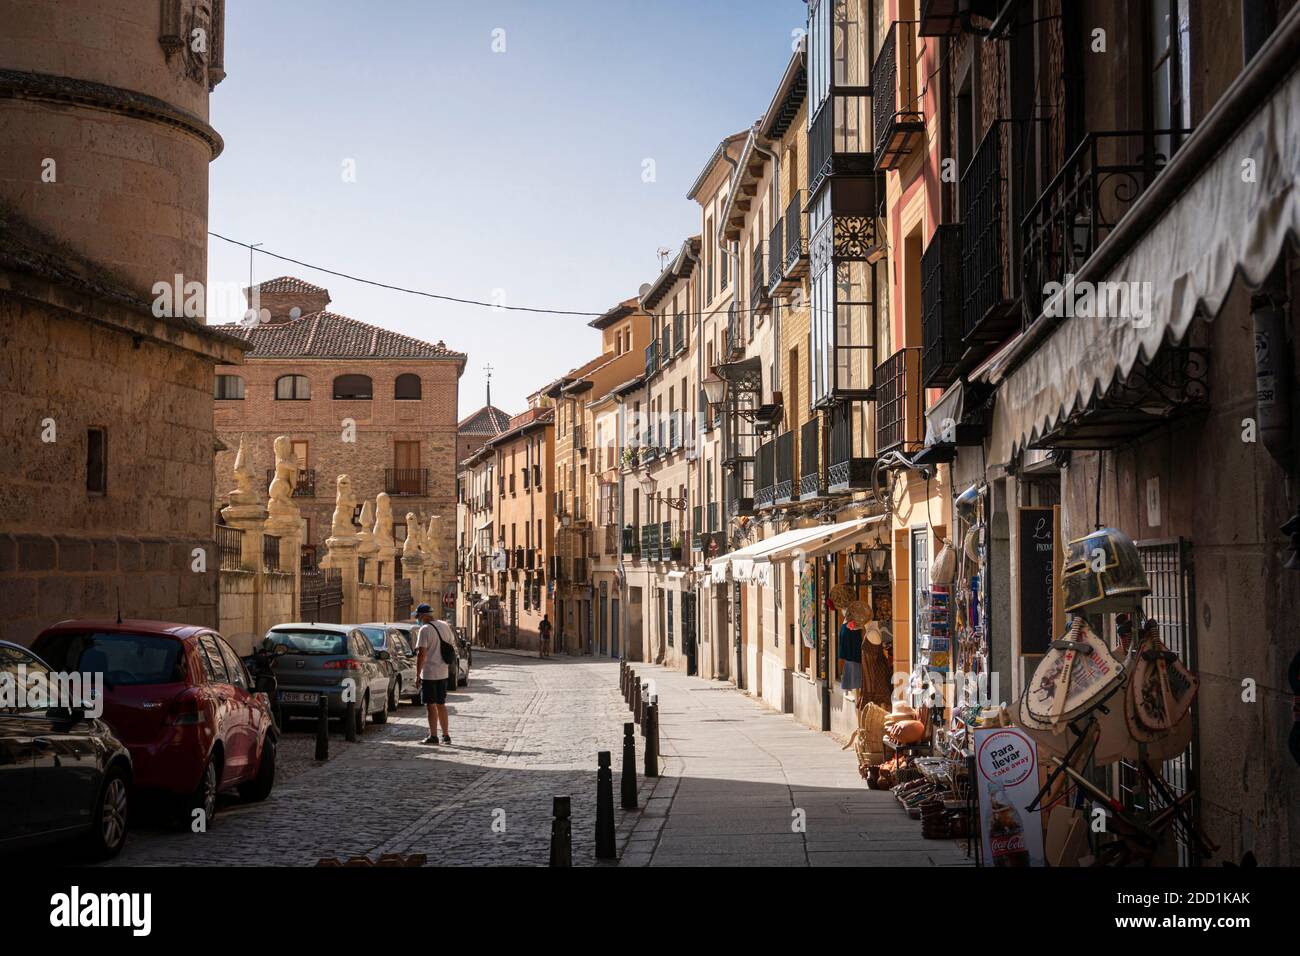 Street view of the city of Segovia, Spain Stock Photo